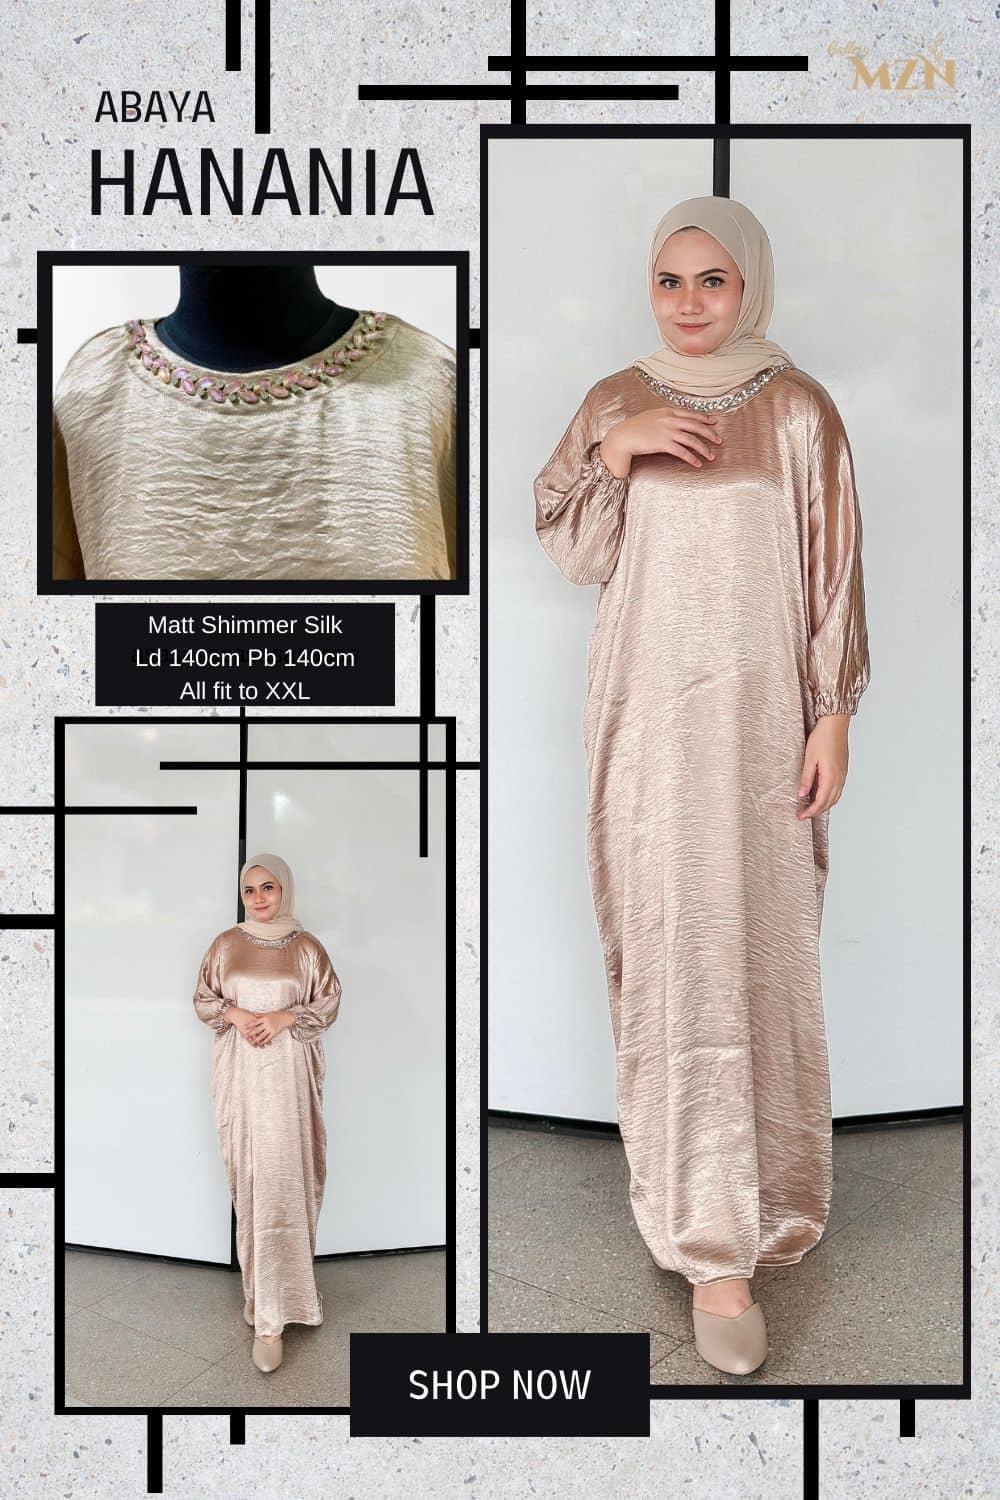 Abaya Hanania Shimmer Silk, Glossy, Metalic Shining Foto Model #9